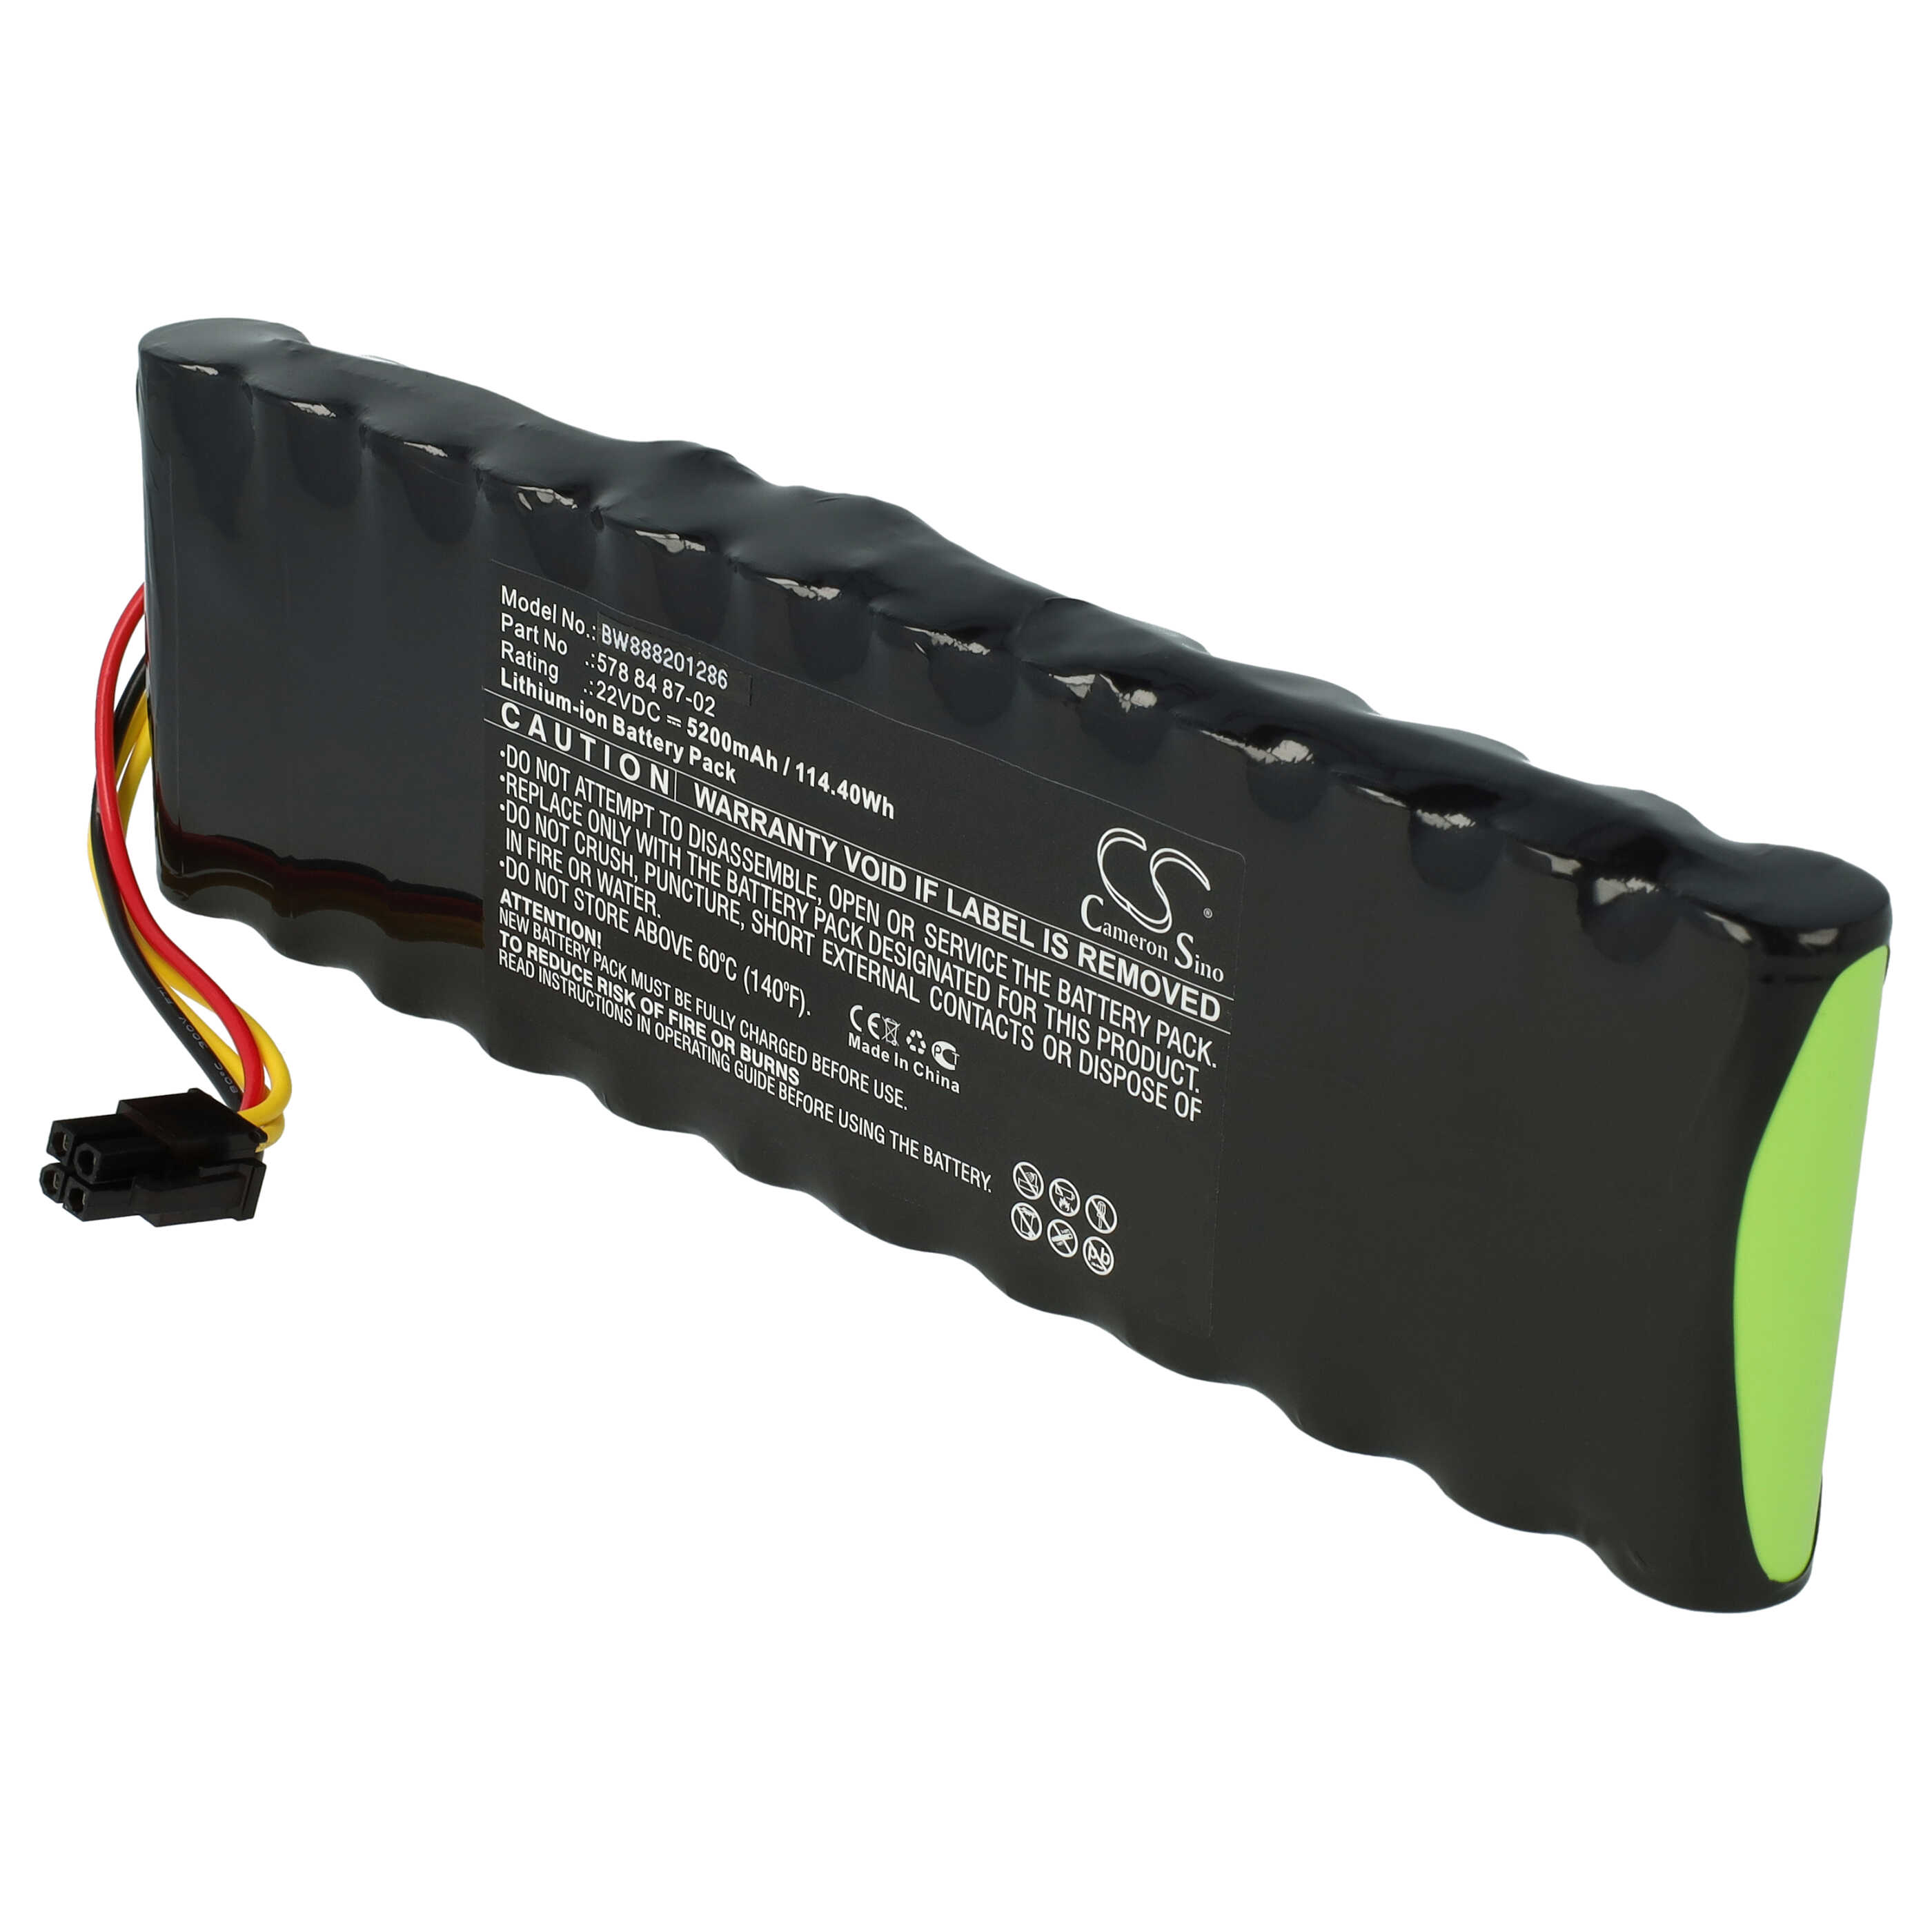 Lawnmower Battery Replacement for Husqvarna 578 84 87-03, 578 84 87-02, 578 84 87-01 - 5200mAh 22.2V Li-Ion